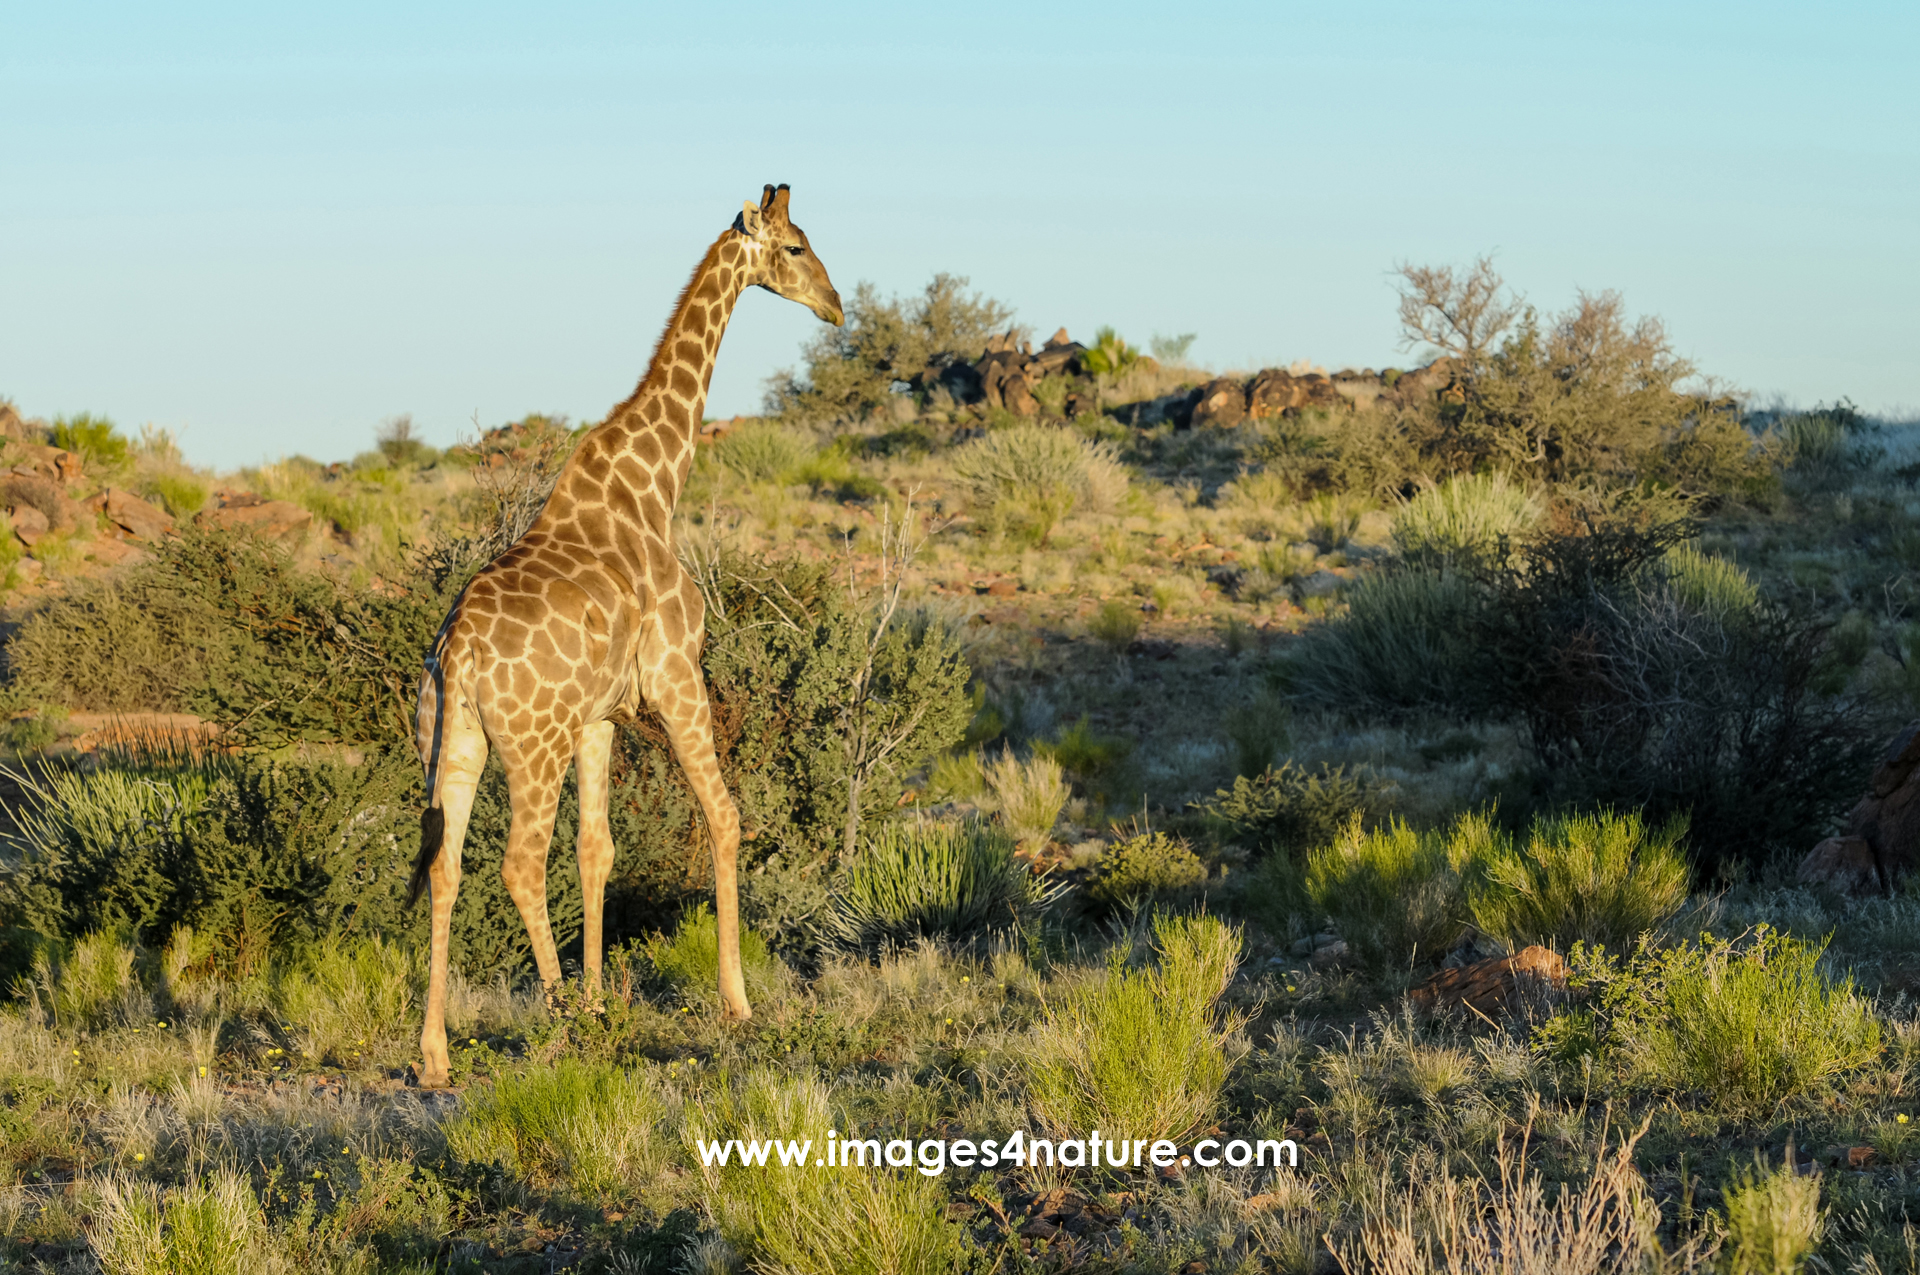 Single giraffe walking in the South African savanna afternoon sun